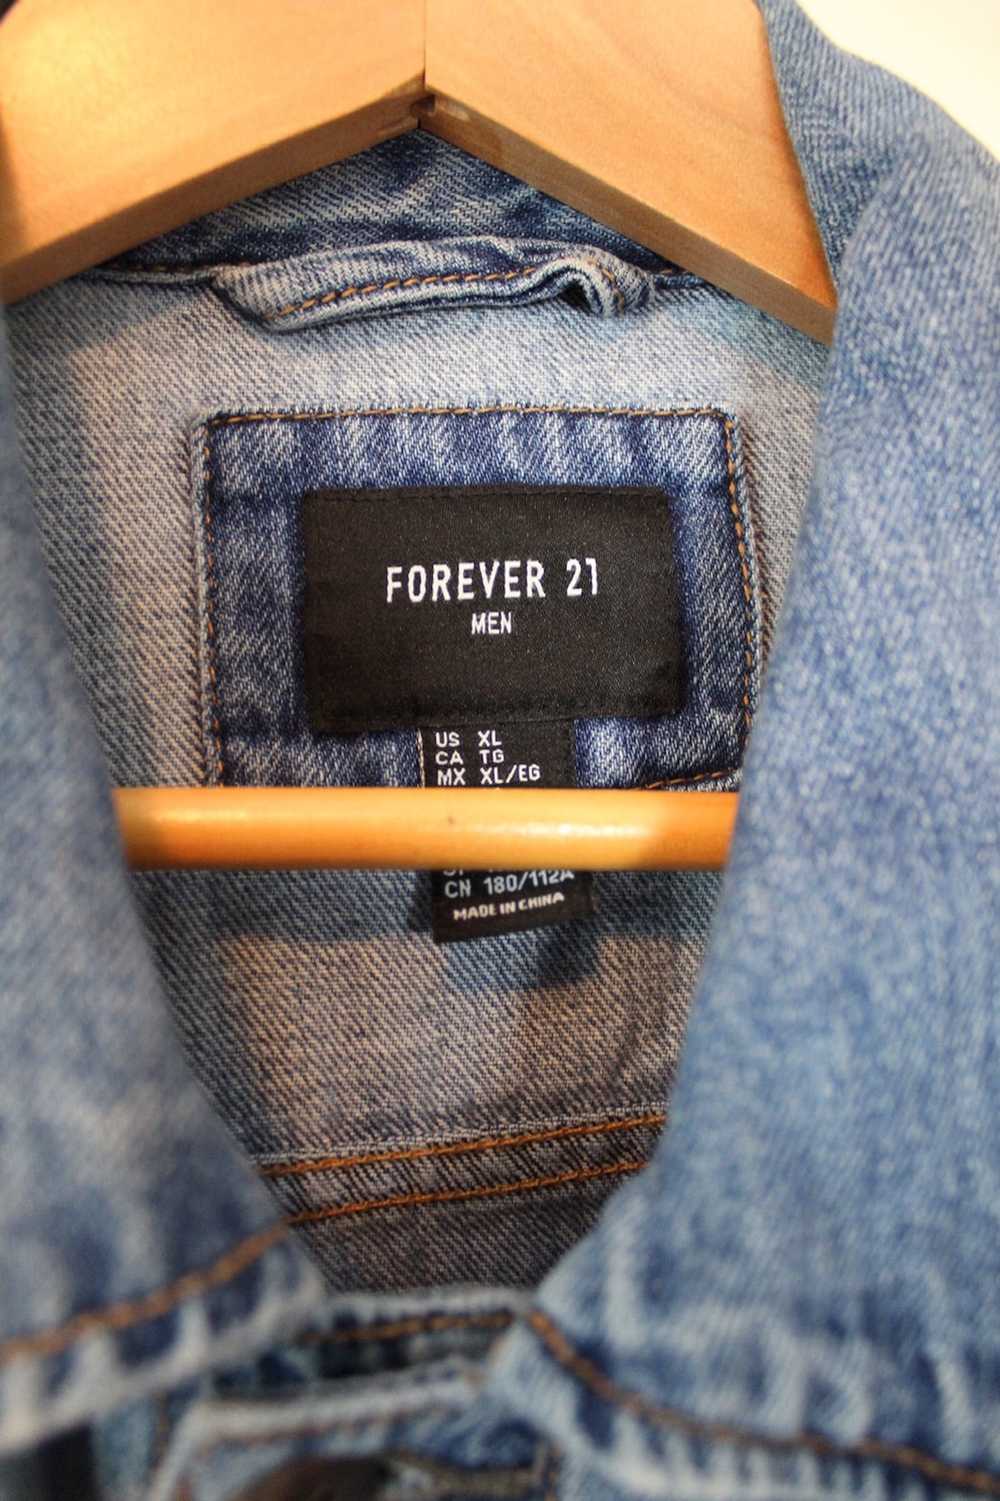 Forever 21 Forever 21 Denim Jacket - image 2